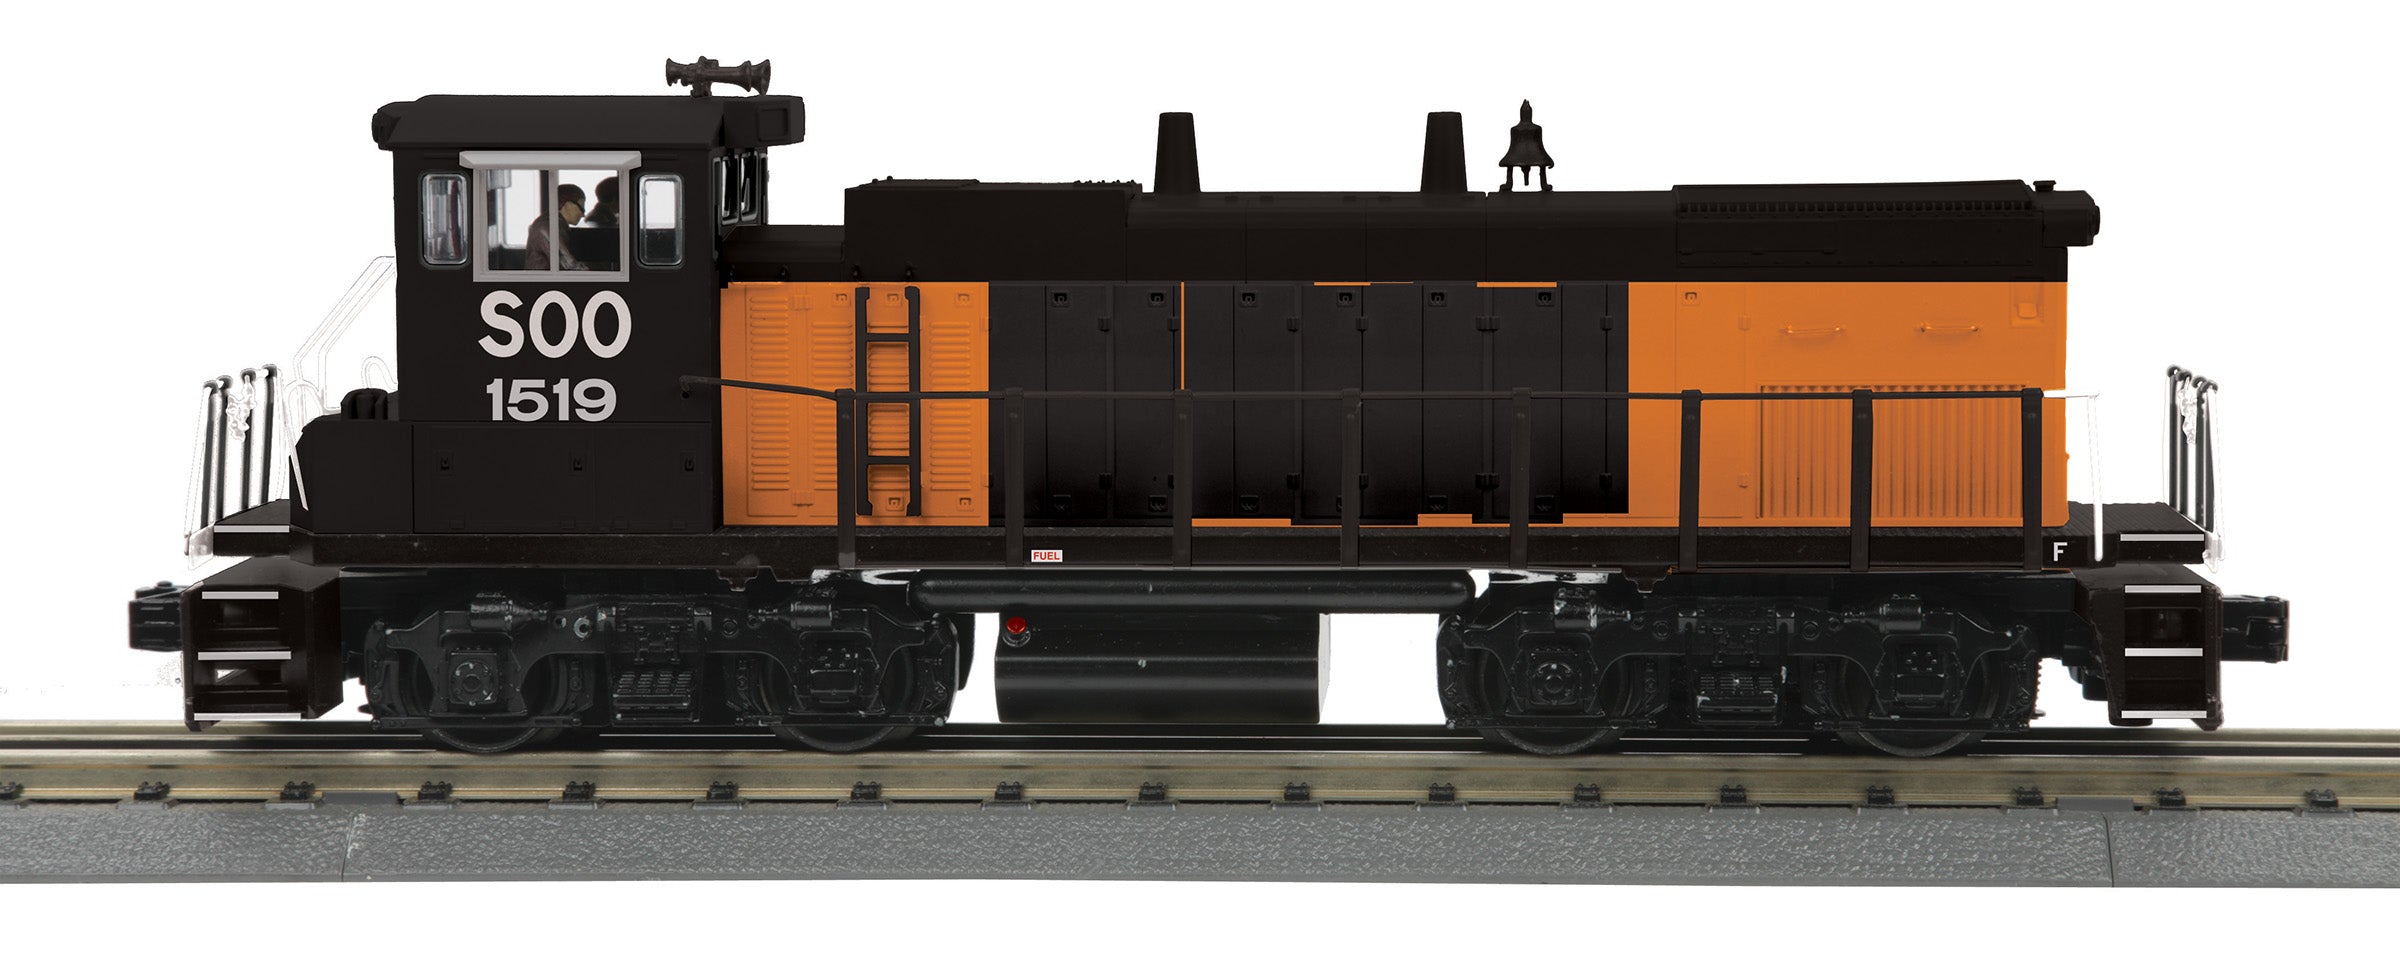 MTH 30-20969-1 - MP15 Diesel Engine "SOO Line" (Milwaukee Repaint) #1519 w/ PS3 - Custom Run for MrMuffin'sTrains